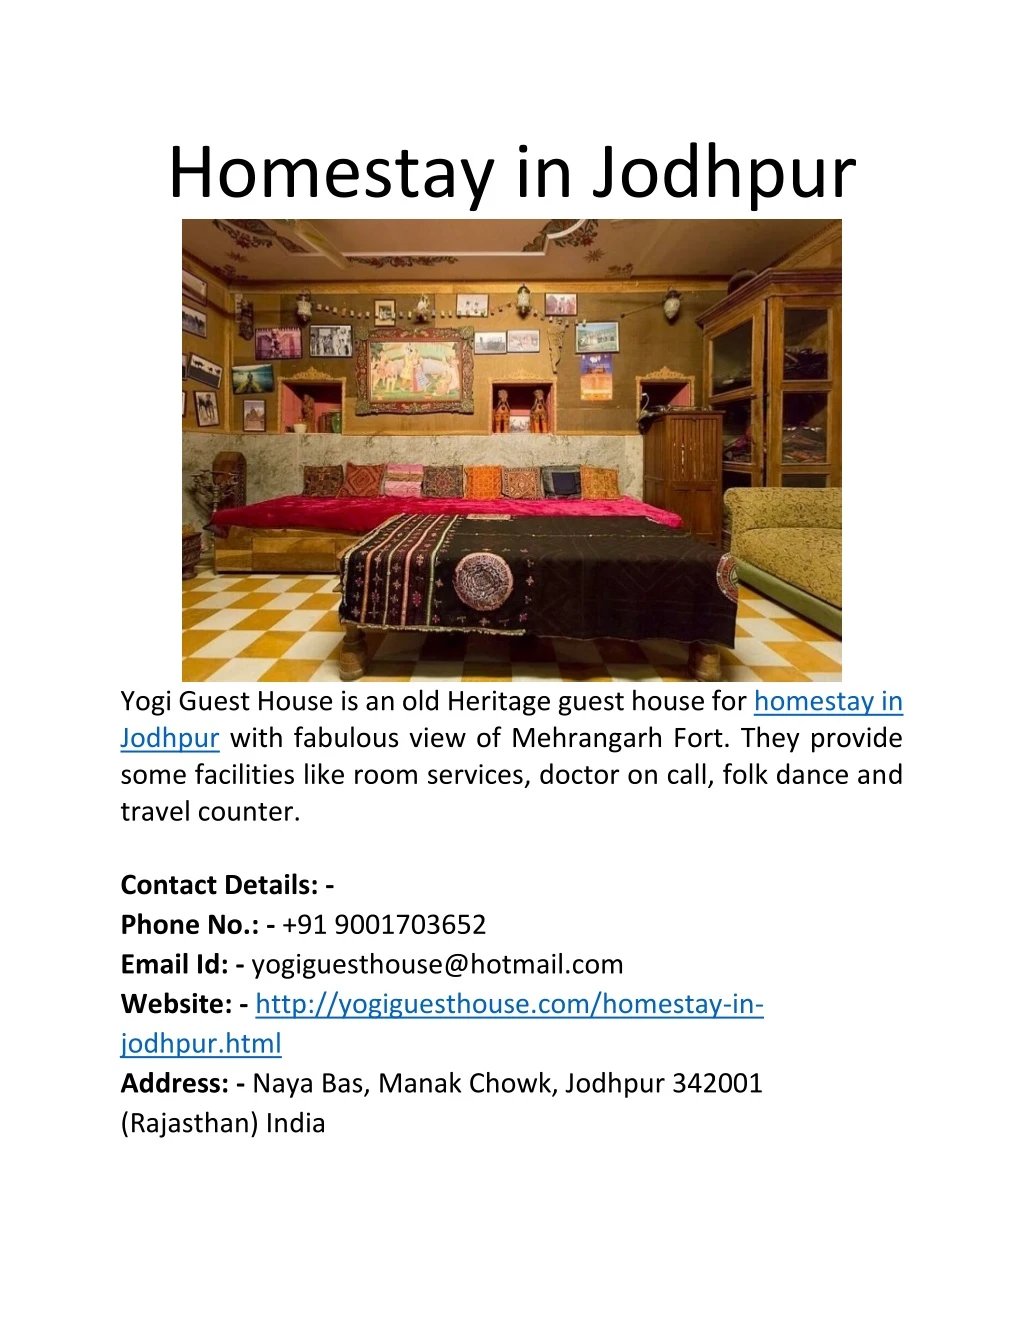 homestay in jodhpur